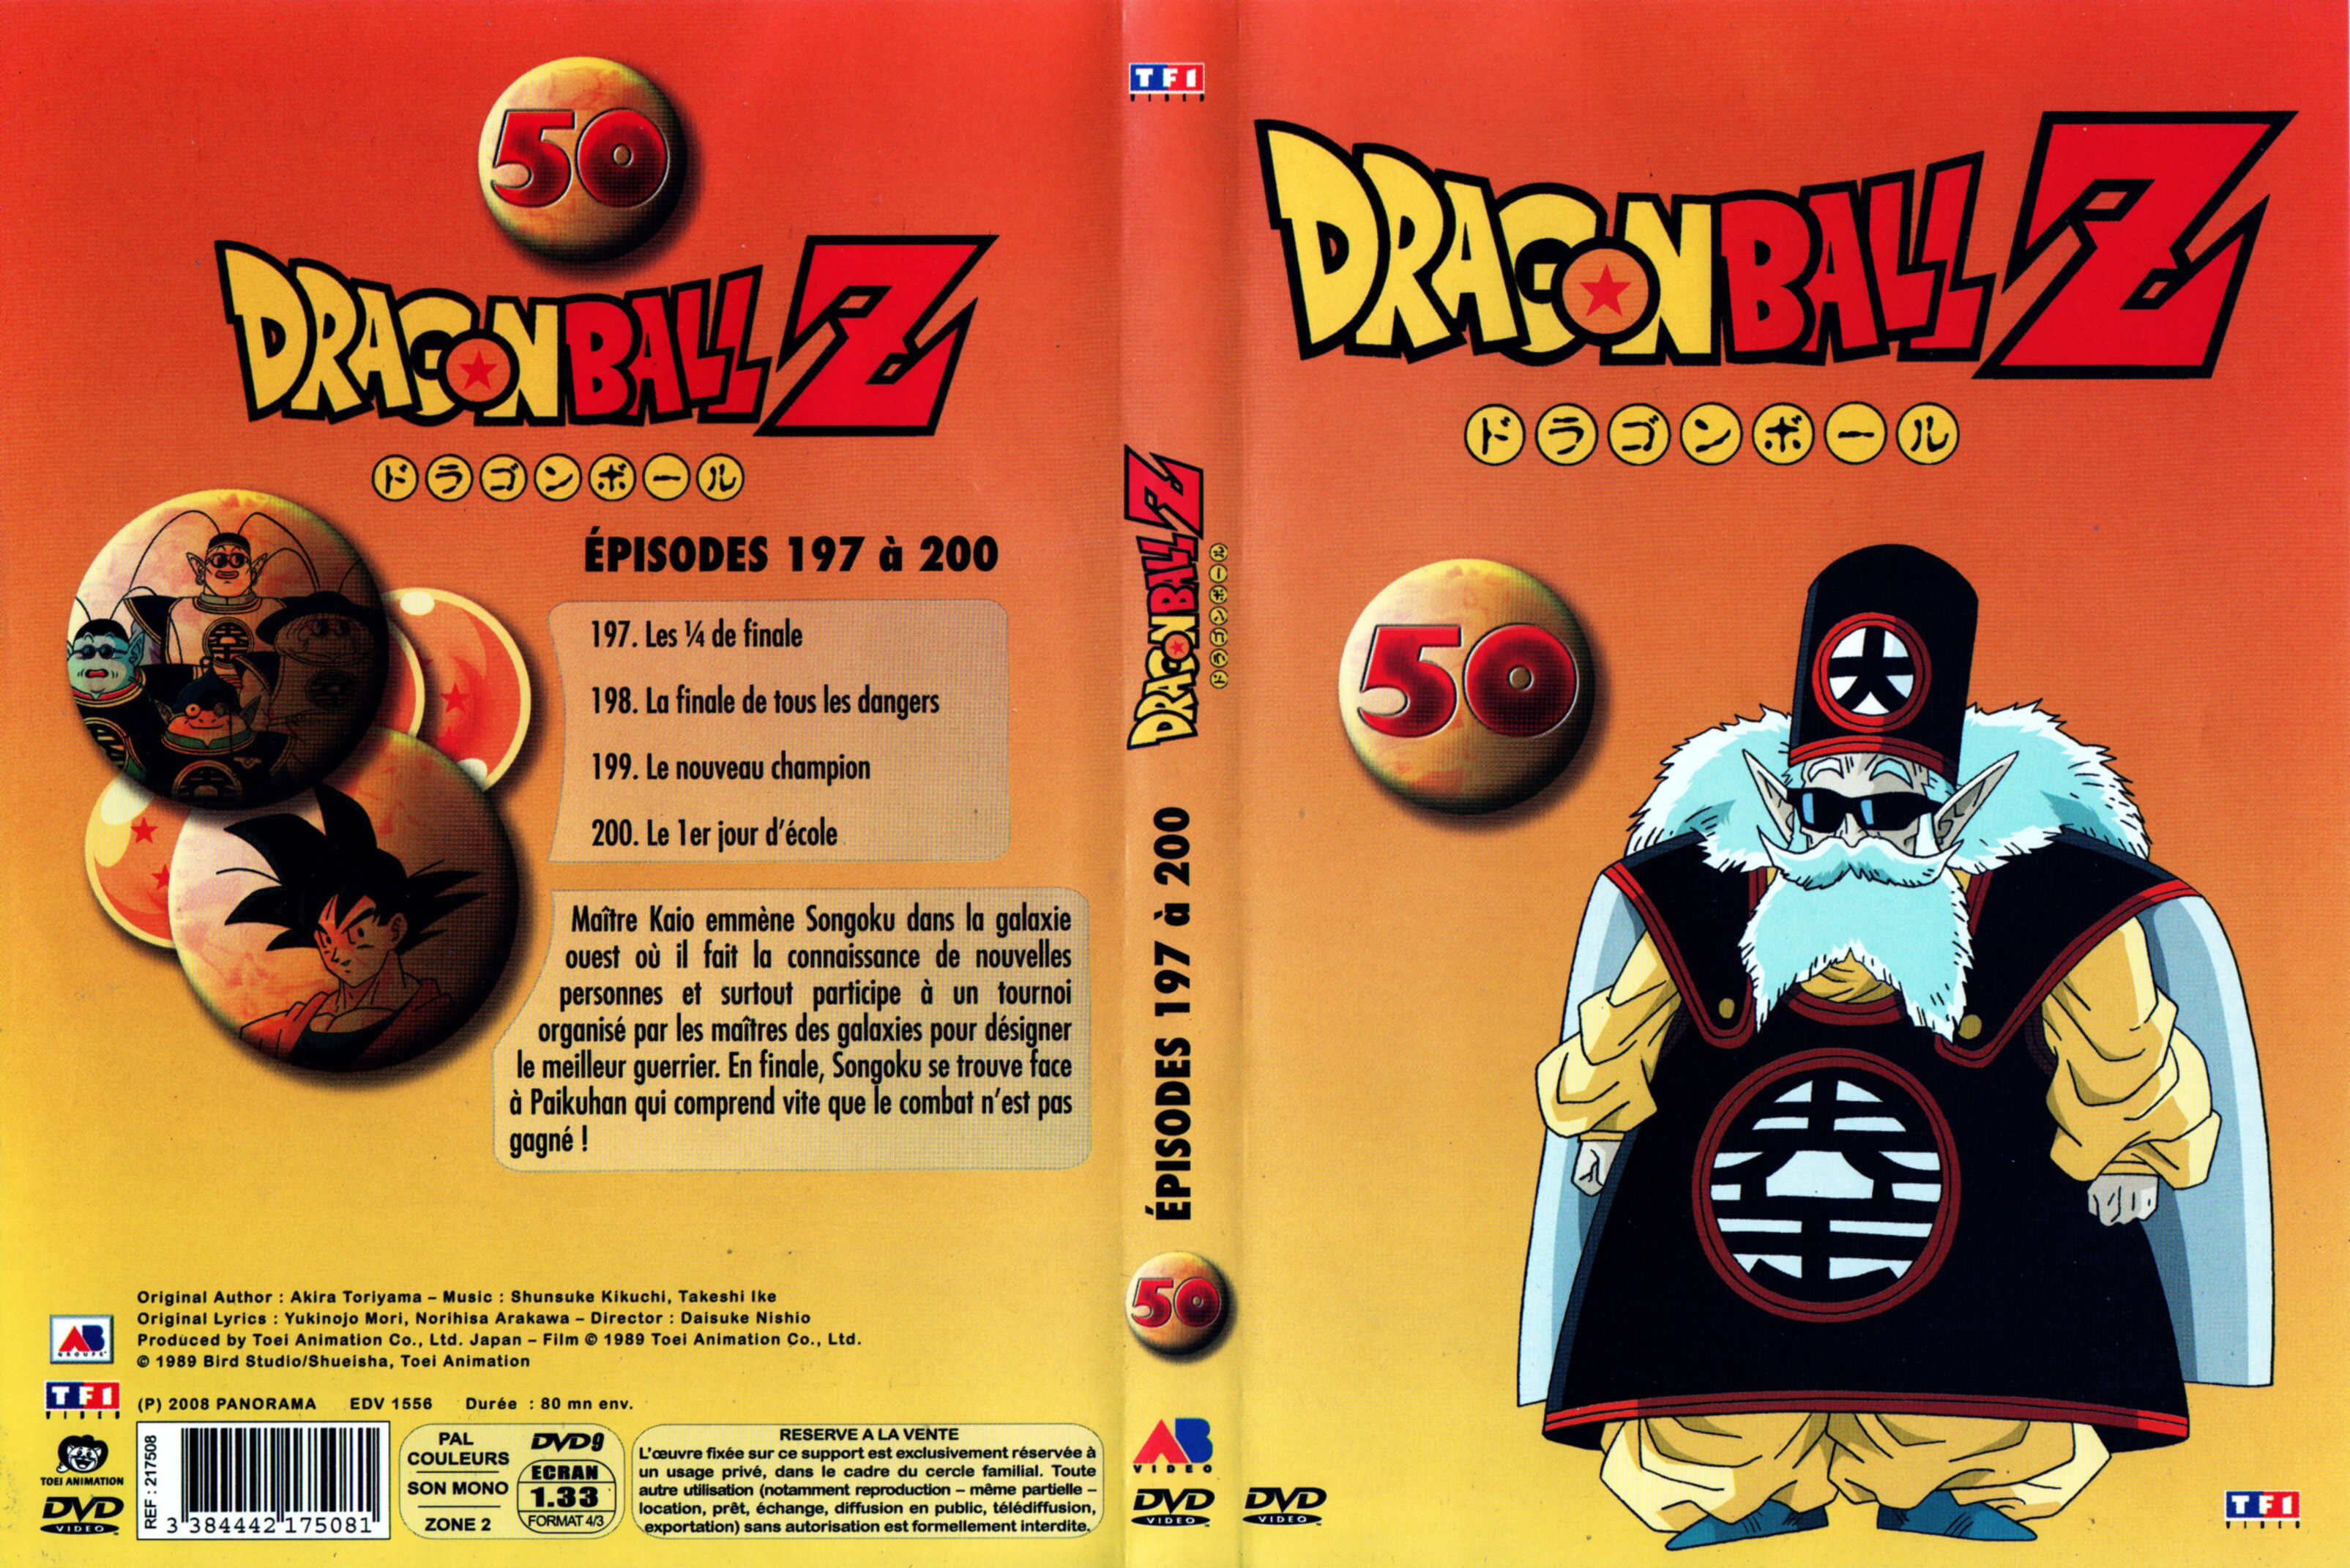 Jaquette DVD Dragon Ball Z vol 50